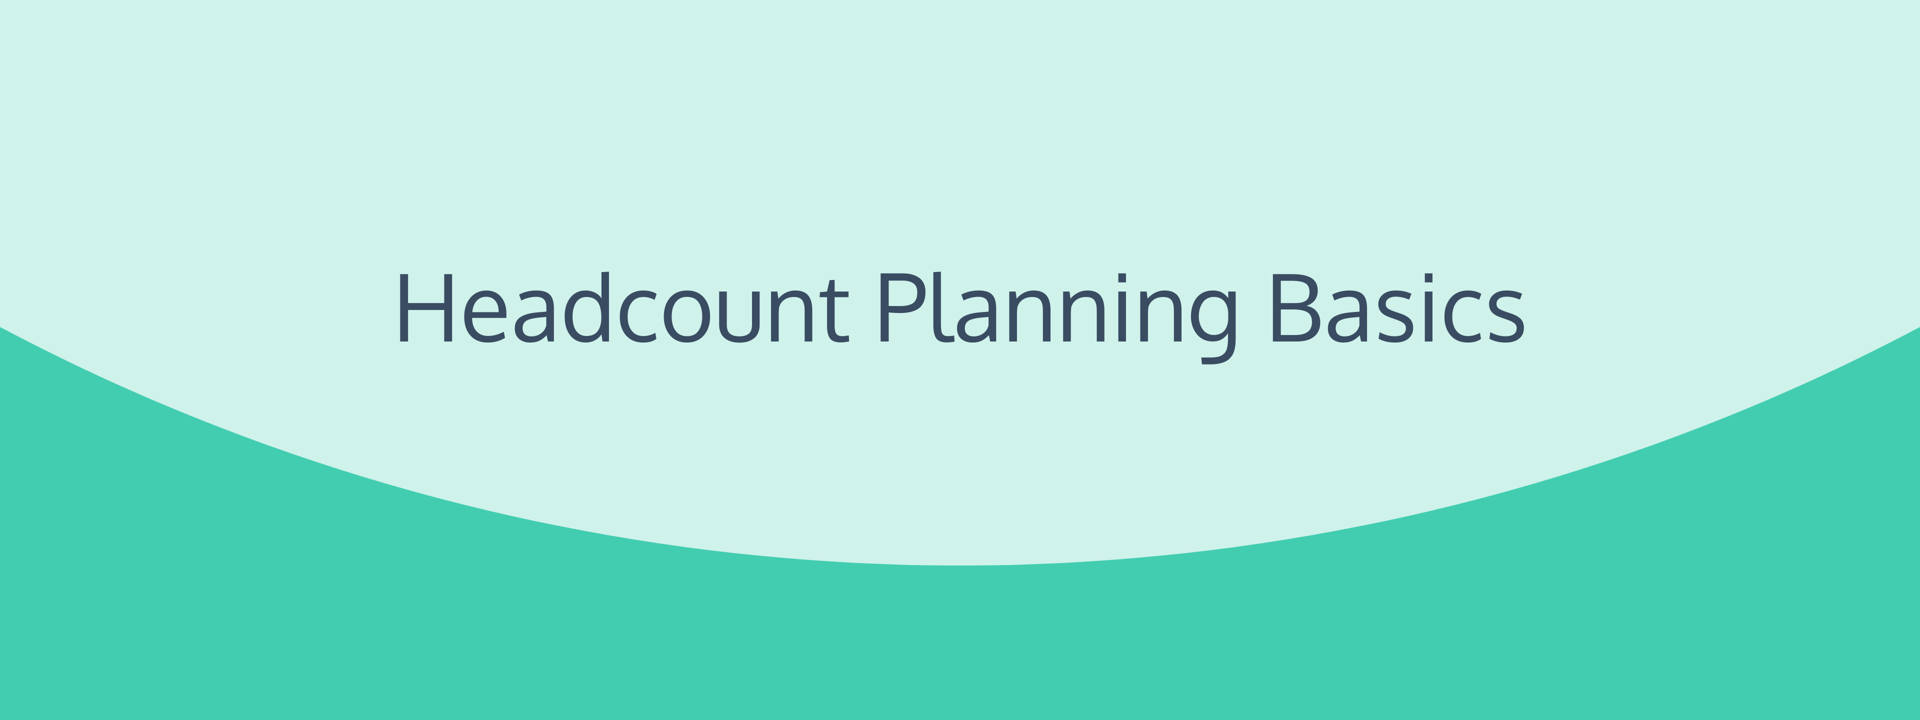 headcount planning basics